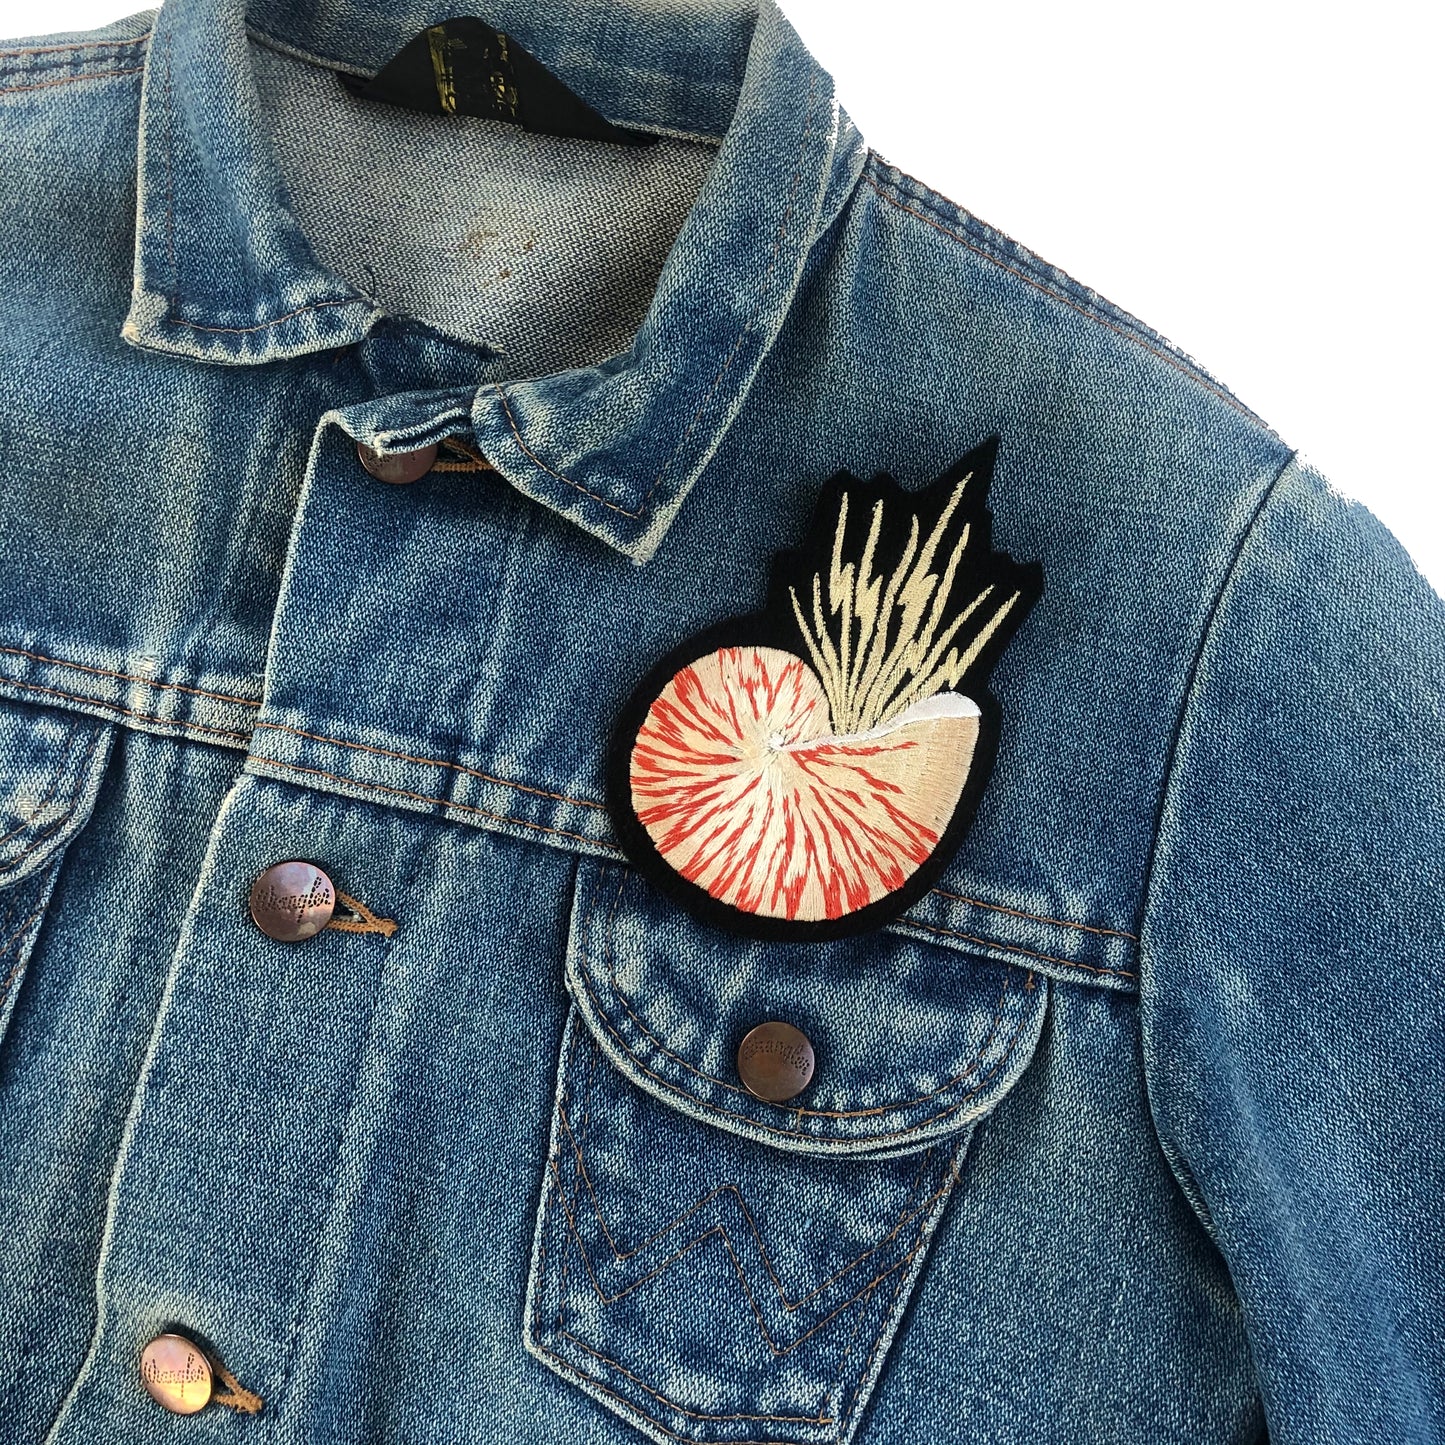 Metallic nautilus shell patch on front shoulder of blue denim jacket